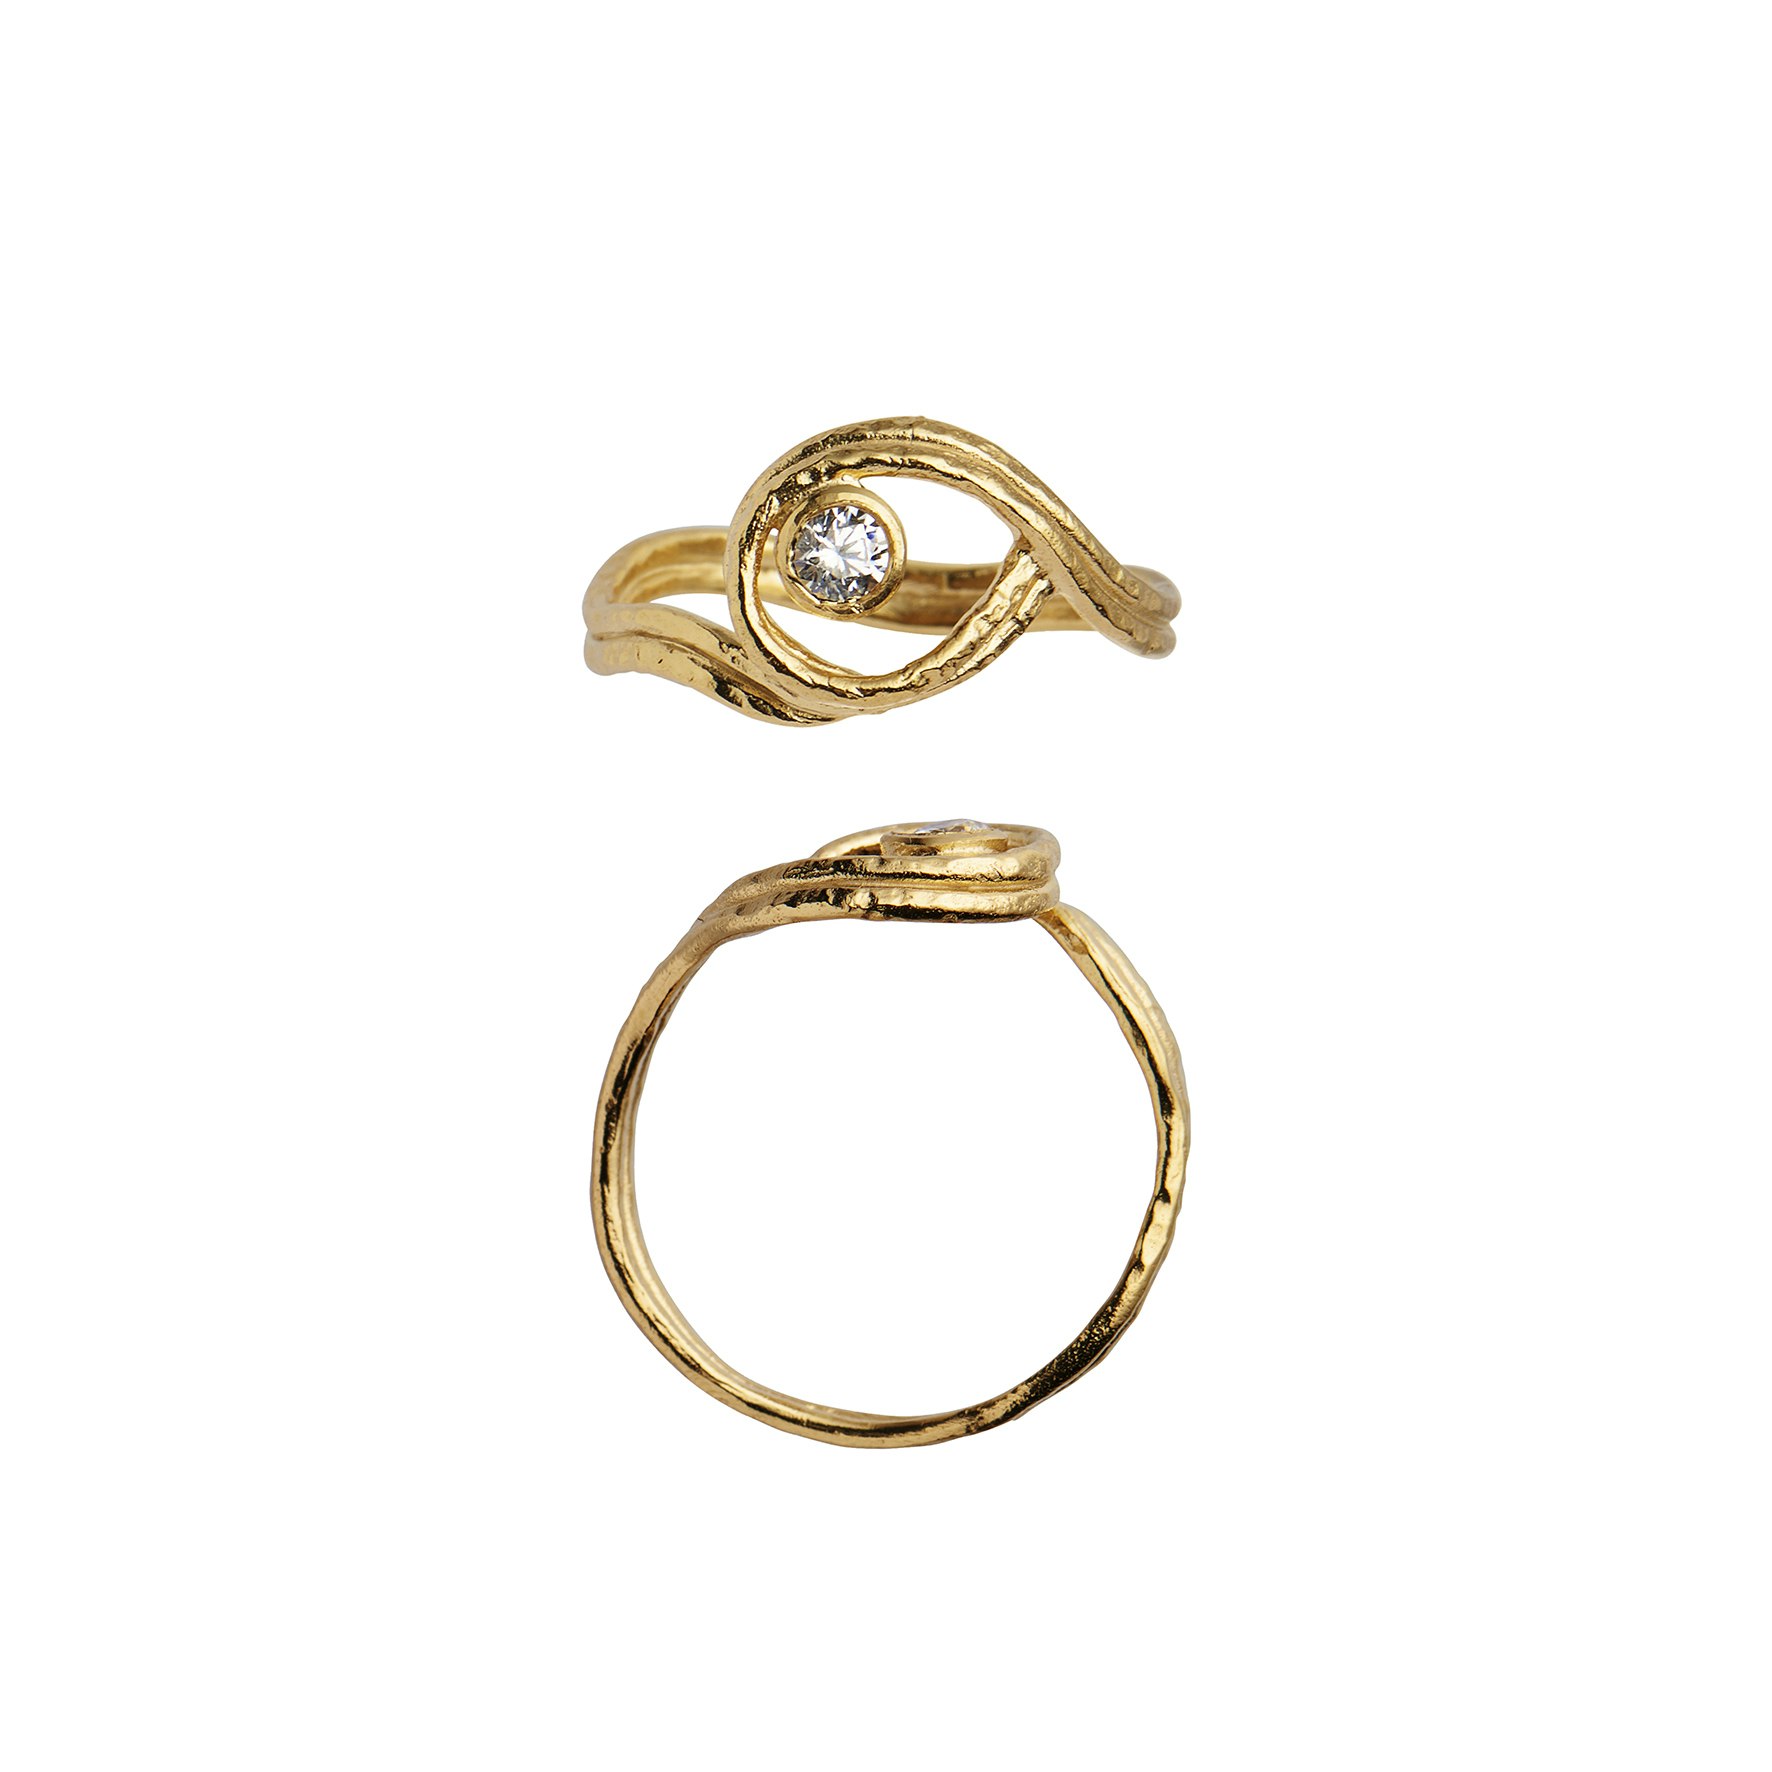 Balance Ring With Stone von STINE A Jewelry in Vergoldet-Silber Sterling 925